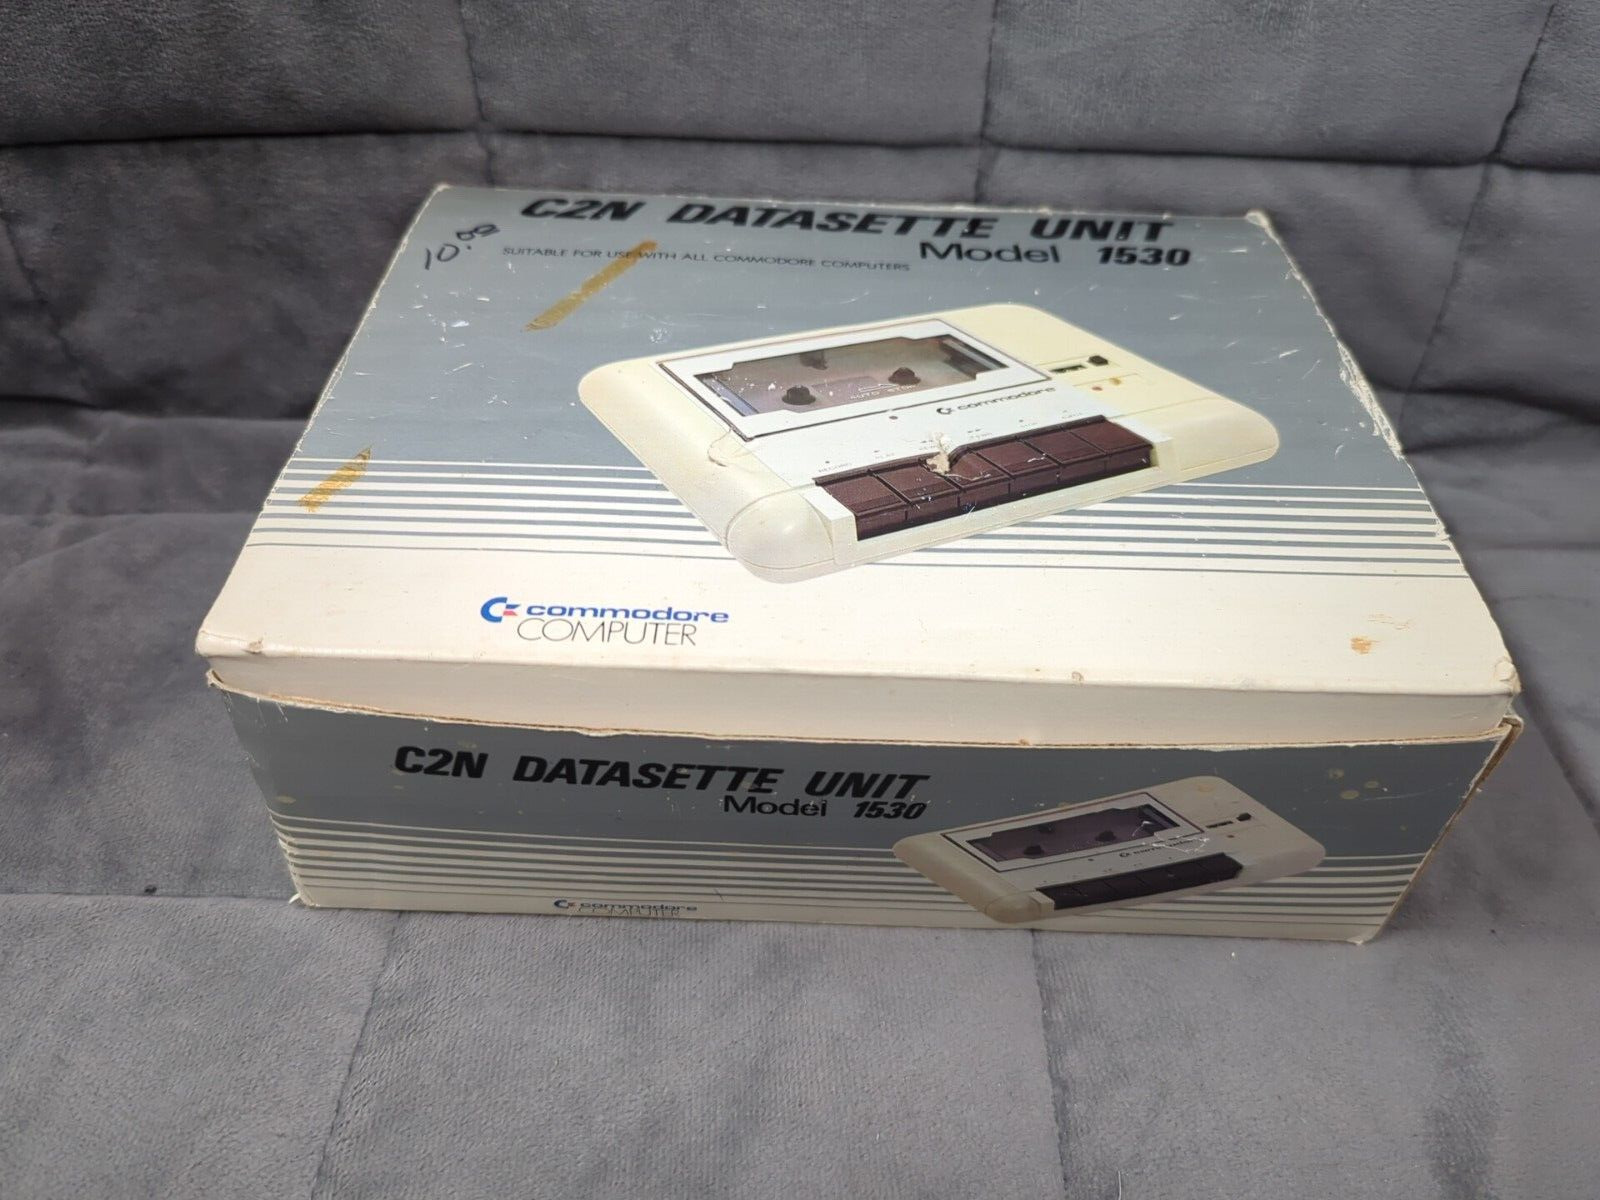 C2N Datassette Unit Model 1530 Commodore Computer W/ Manual UNTESTED